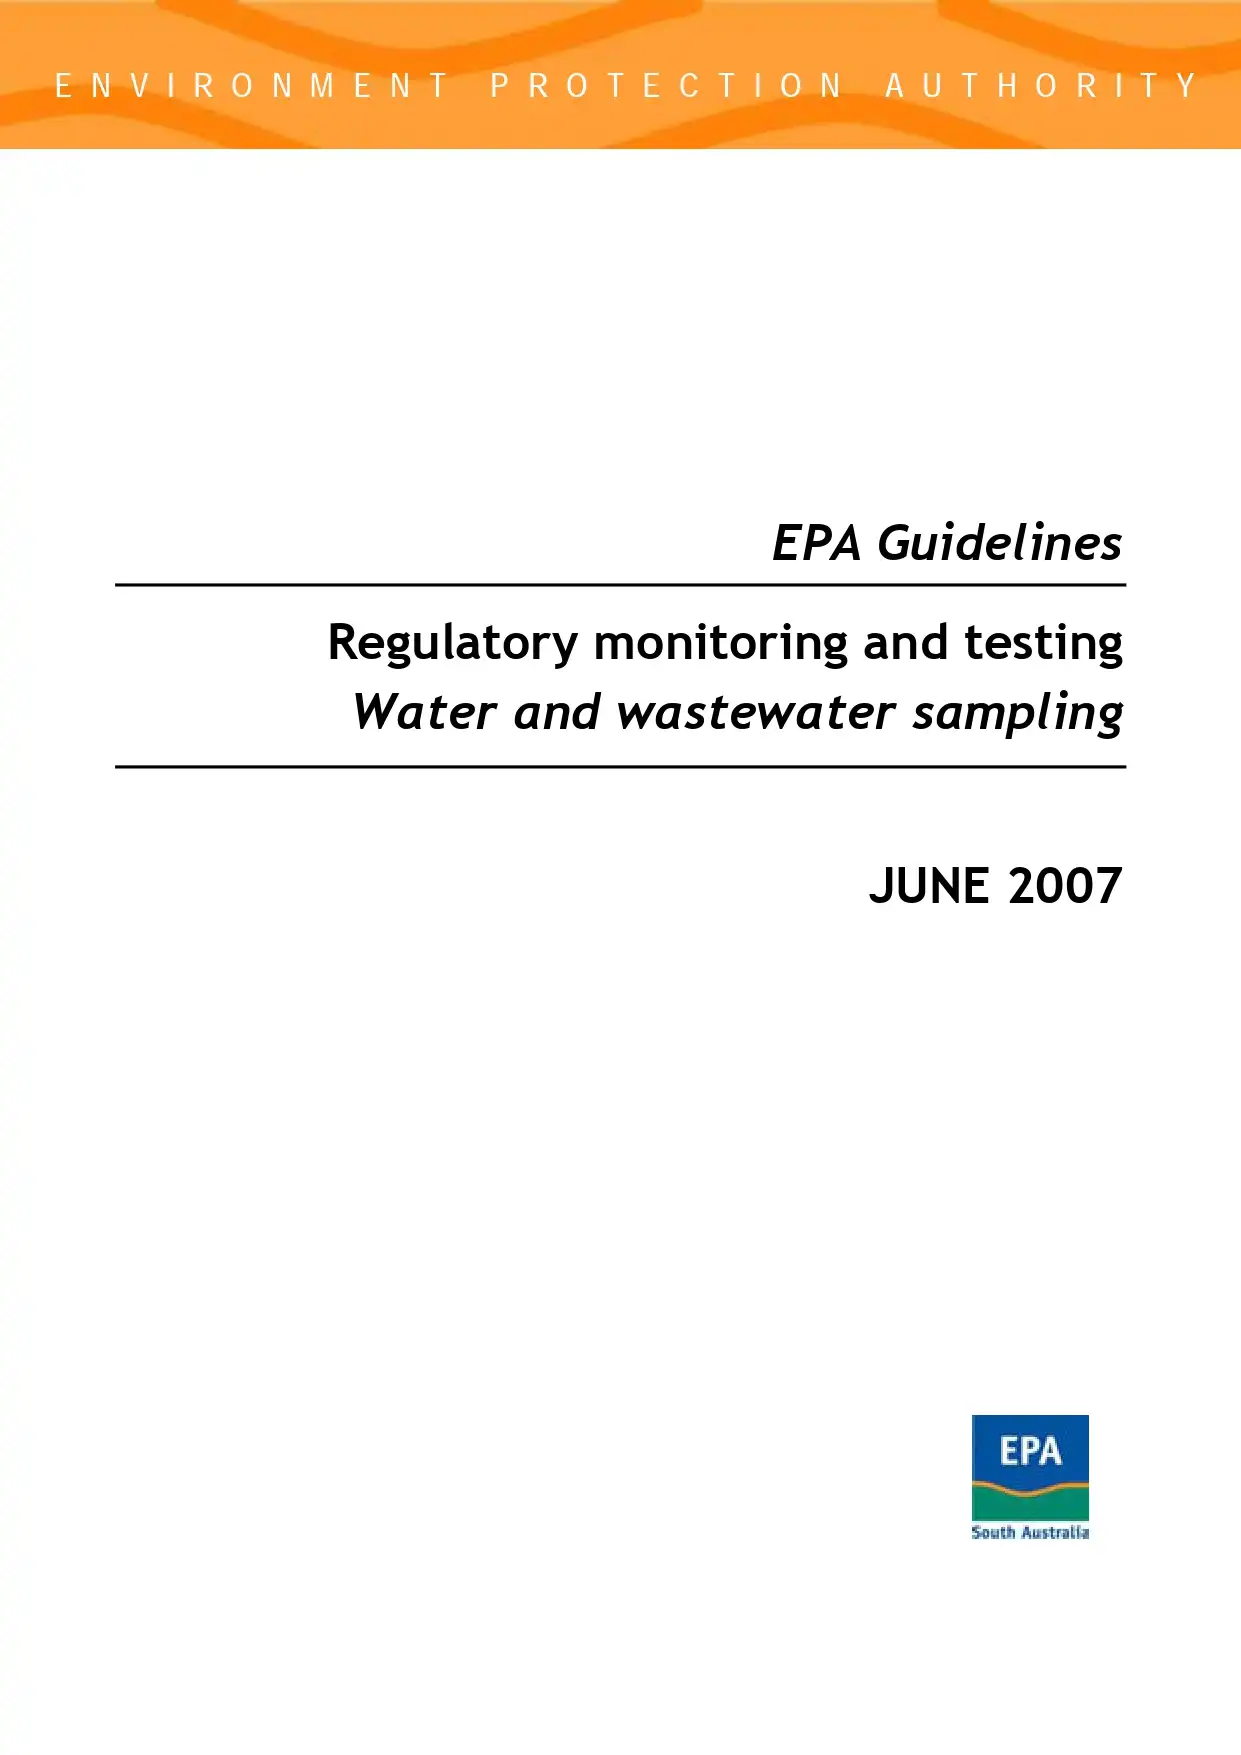 EPA Guidelines: Regulatory Monitoring and Testing Water and Wastewater Sampling